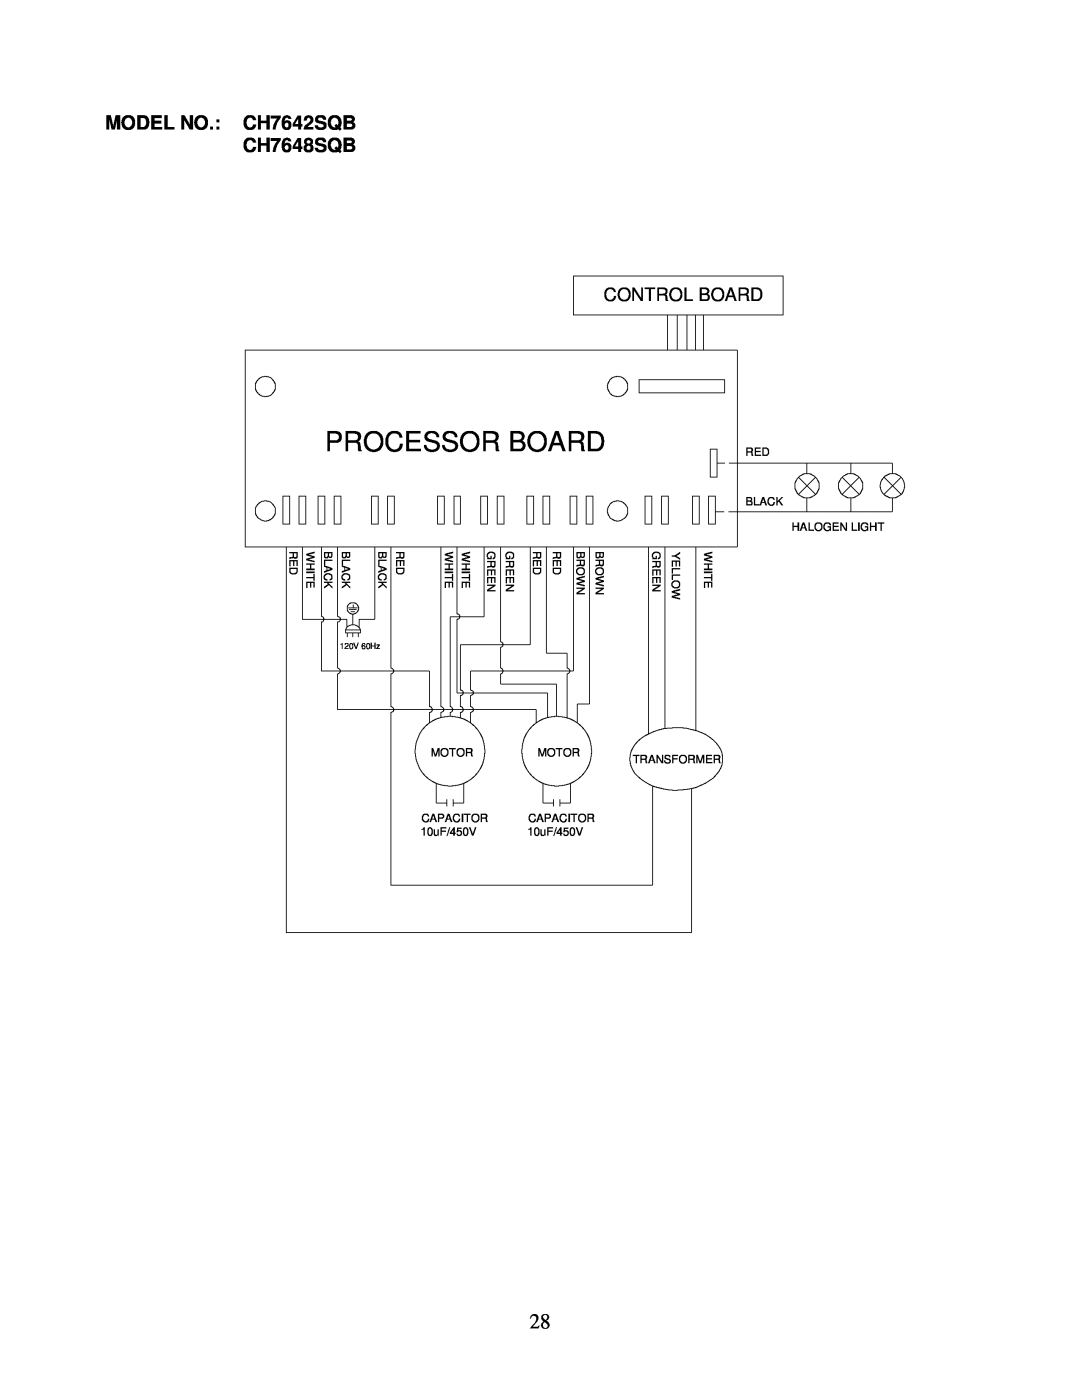 Kobe Range Hoods CH7636SQB, CH7630SQB Processor Board, MODEL NO. CH7642SQB CH7648SQB, Control Board 